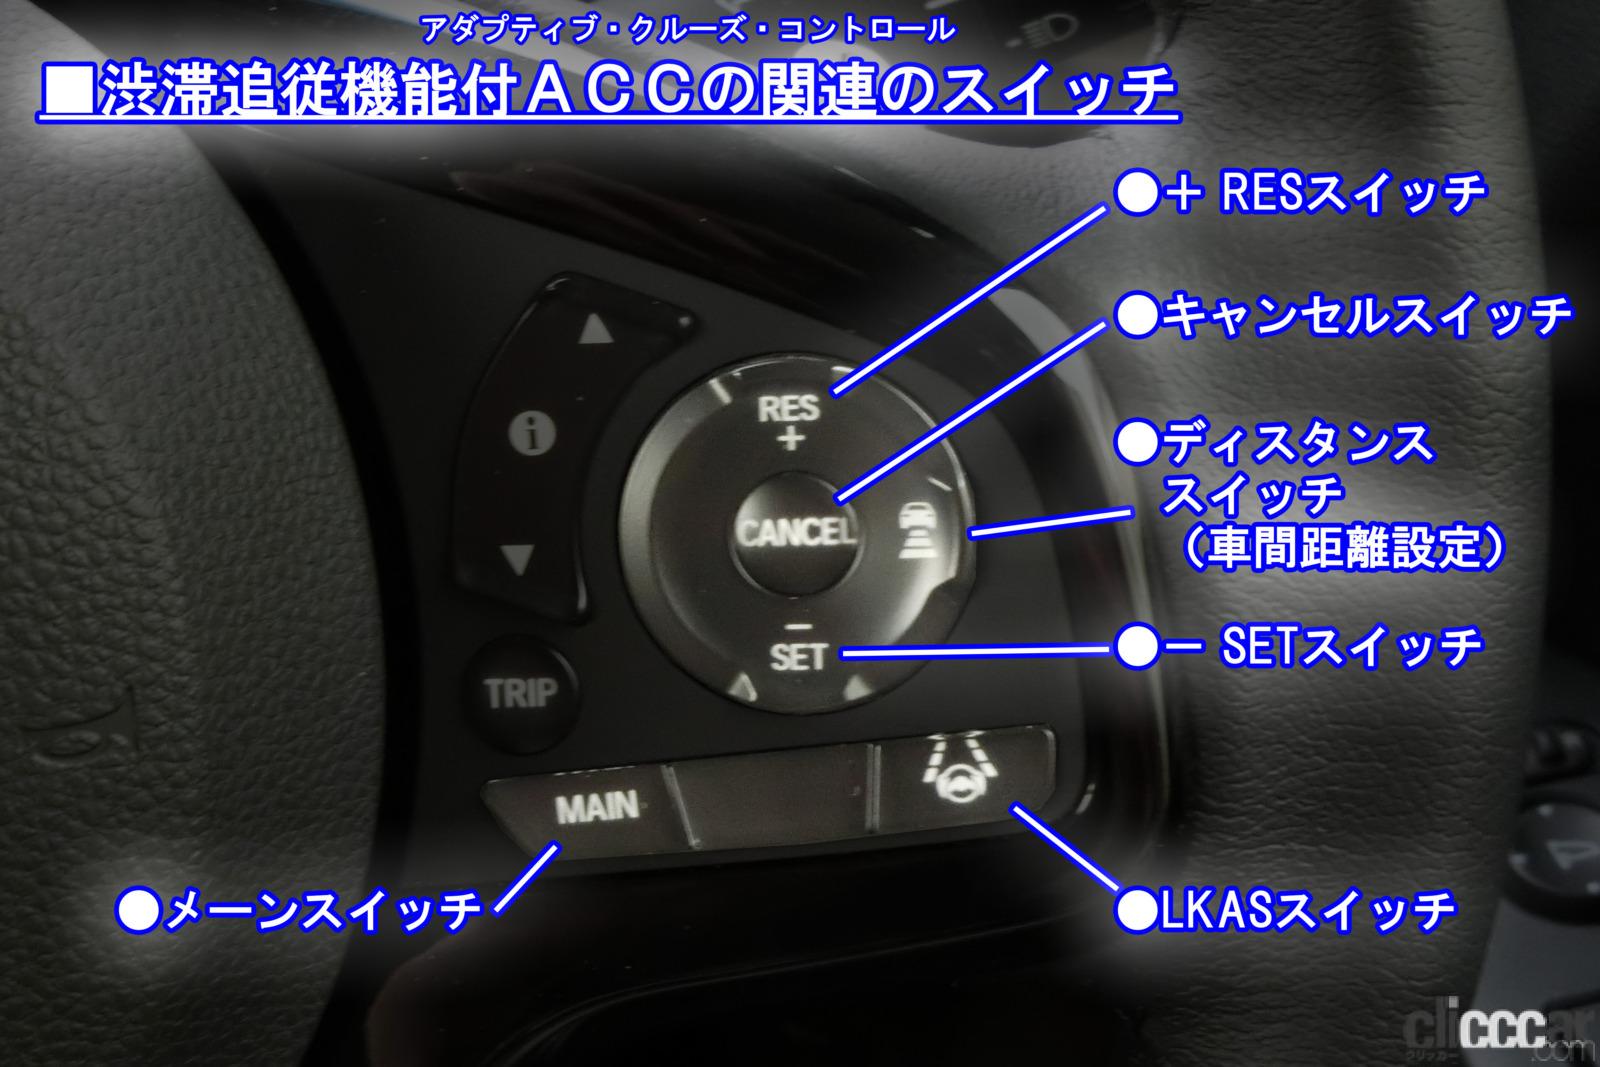 Steering Switch 2 Acc Wt 画像 最新ホンダn Boxのホンダセンシング Accが渋滞追従機能付きに進化してどう変わった 新車リアル試乗3 2 ホンダn Box Honda Sensing編 Clicccar Com